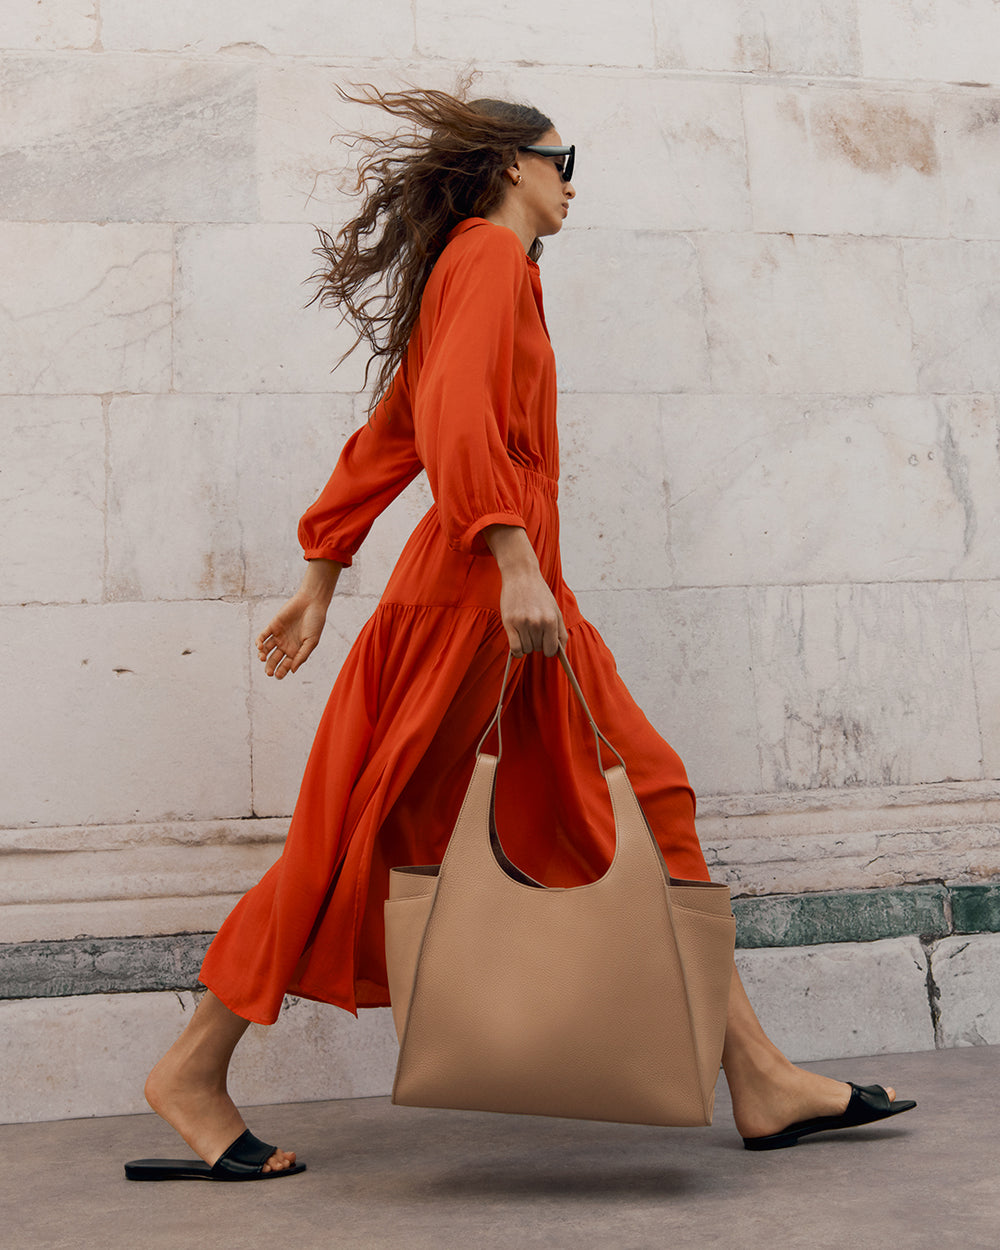 Woman walking briskly with a handbag and sunglasses.